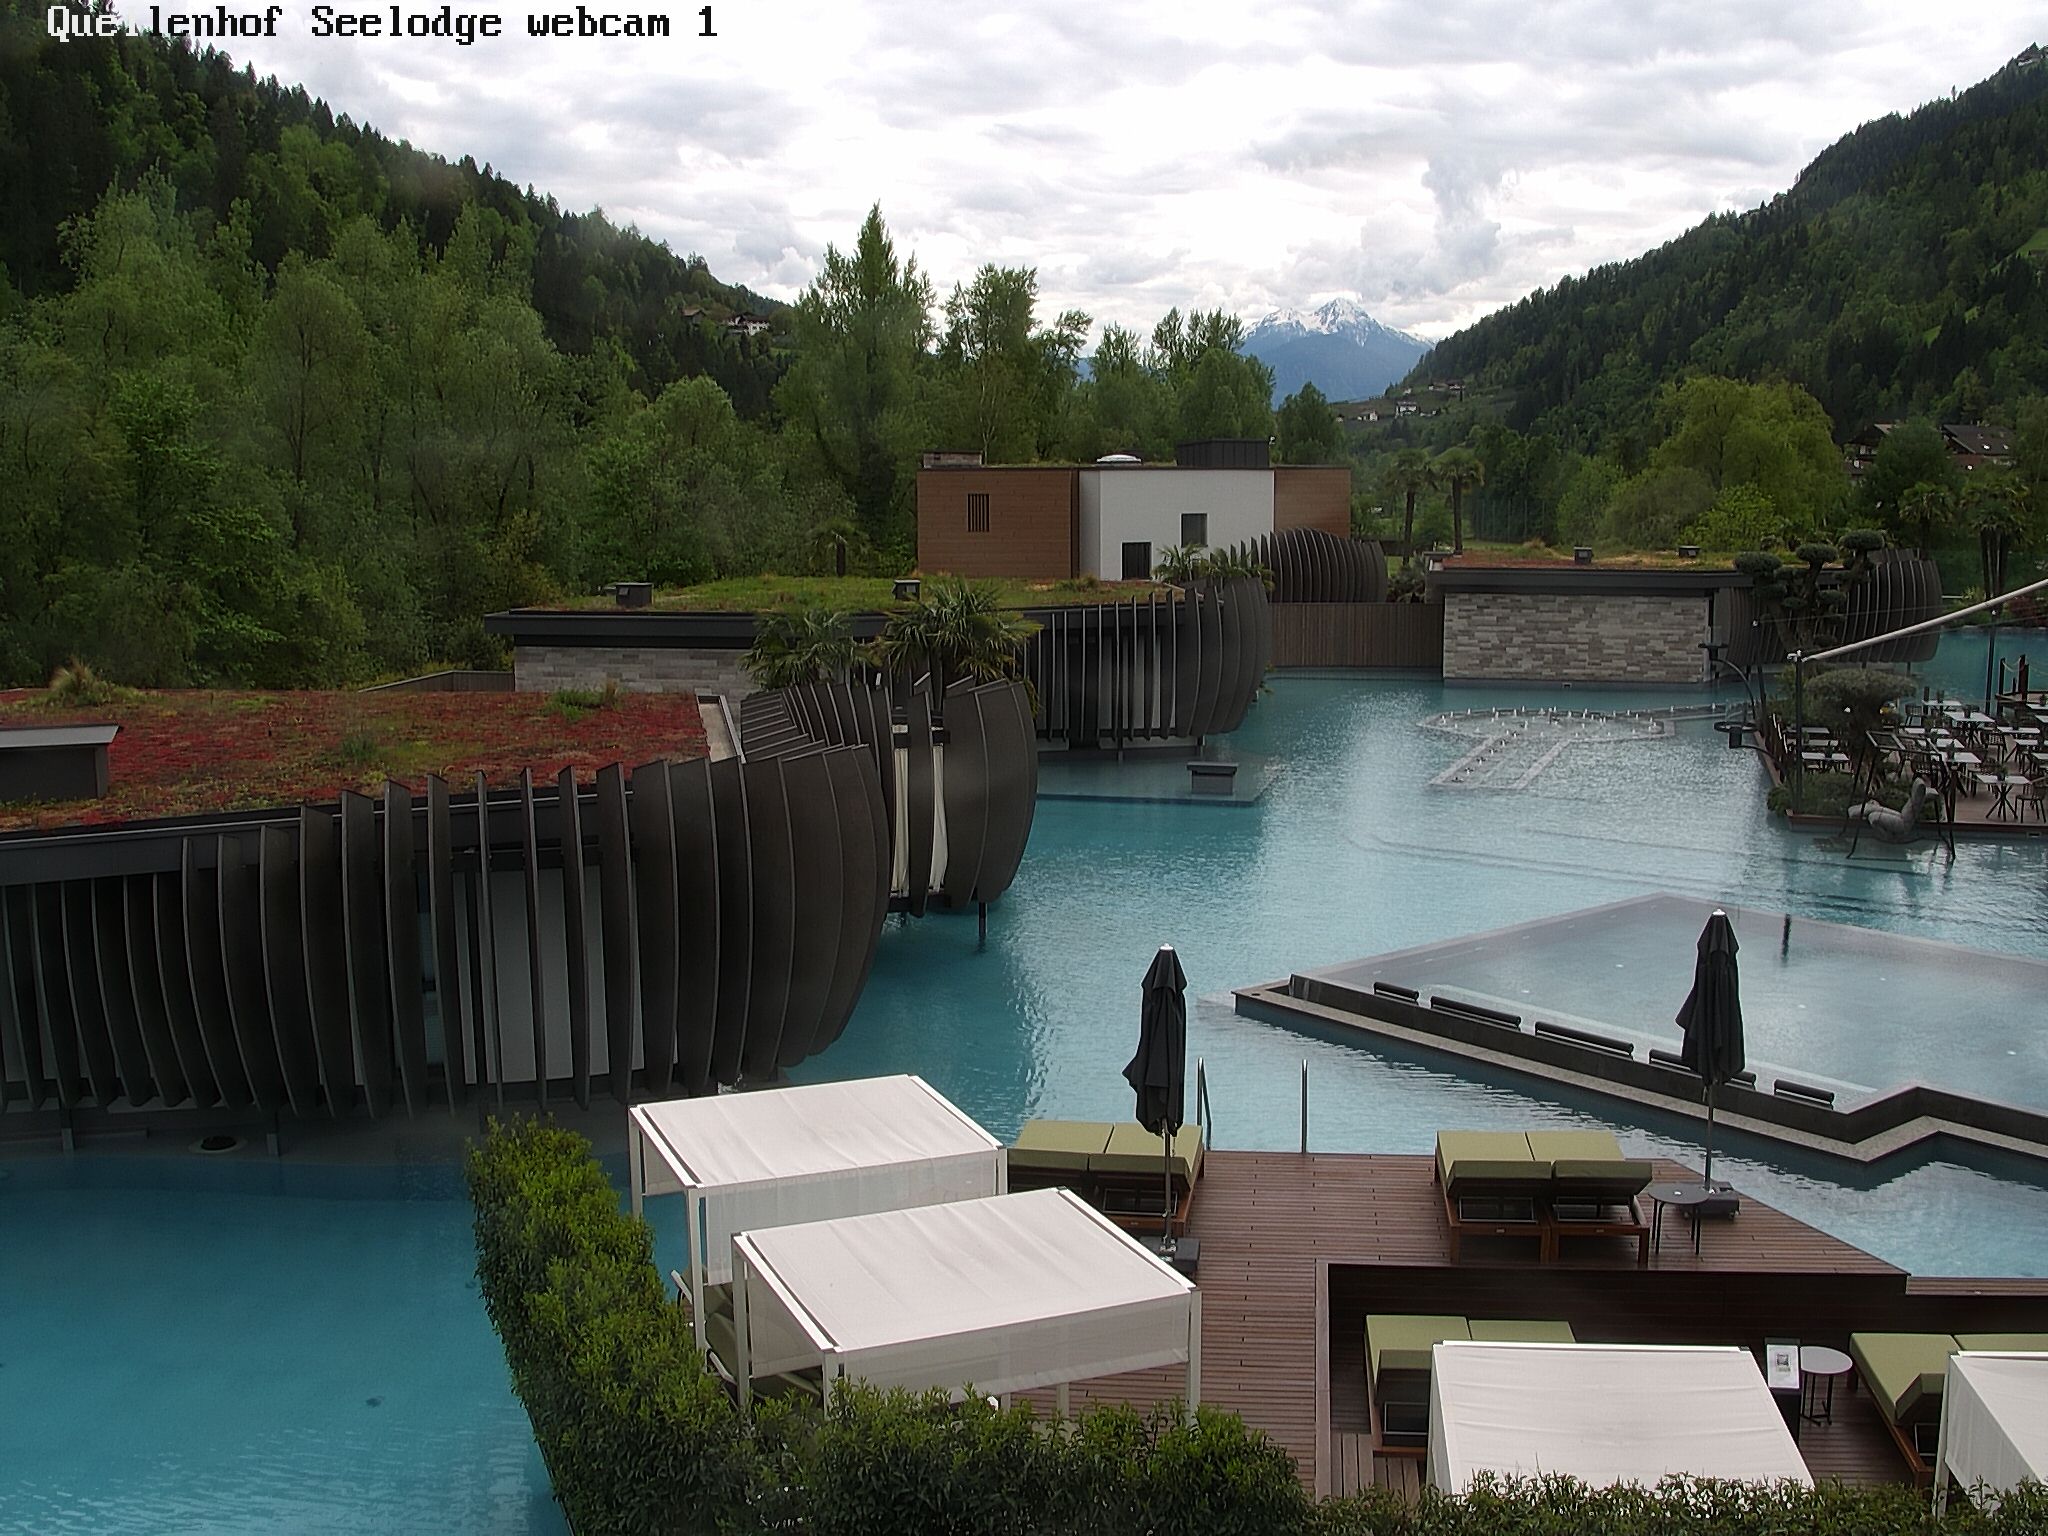 Die Live-Webcams der Quellenhof See Lodge